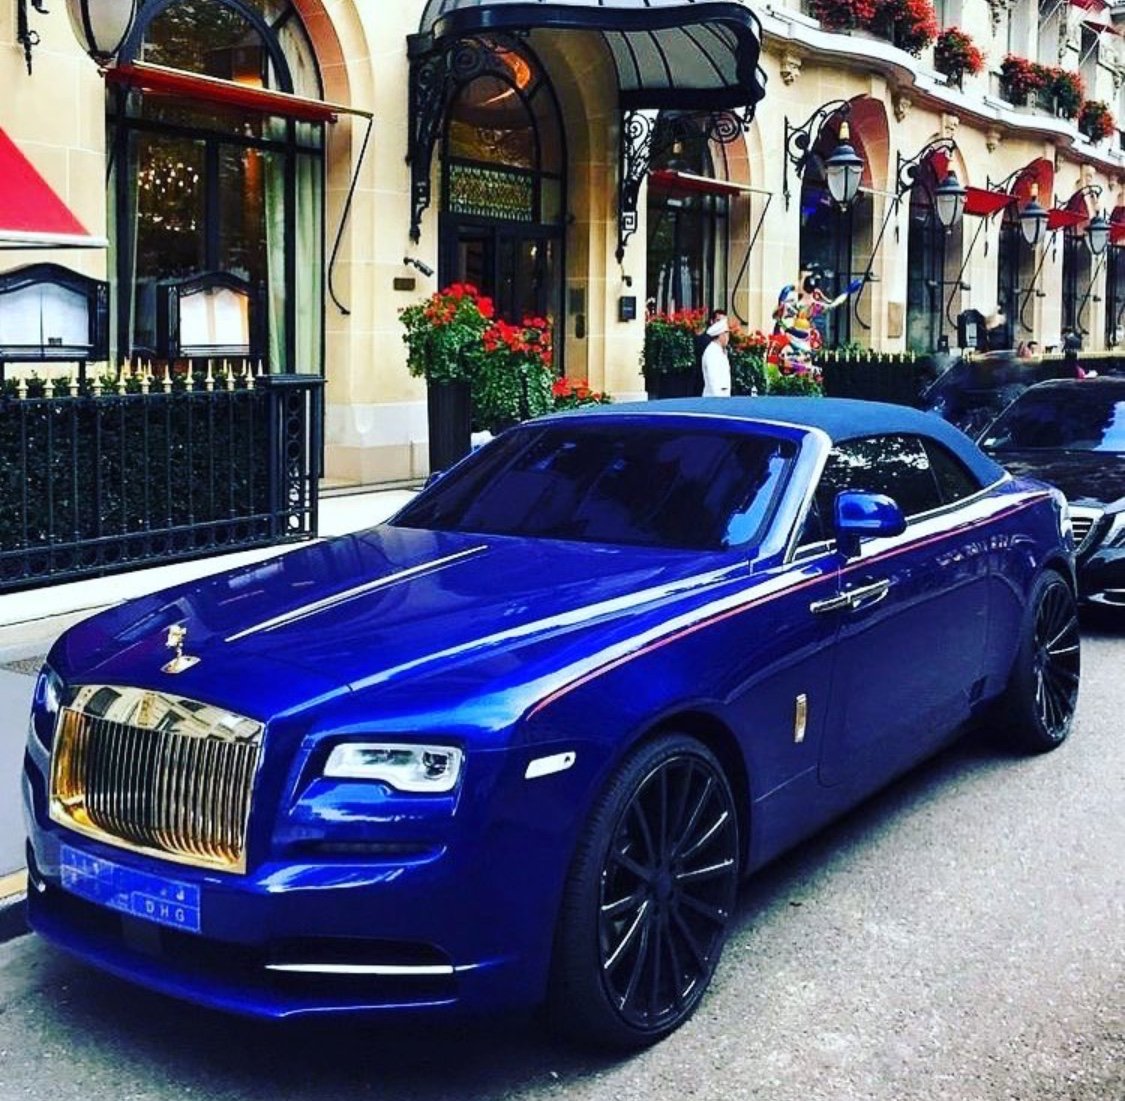 Авто роллс. Роллс Ройс. Автомобиль Роллс Ройс. Роллс Ройс Luxury. Rolls Royce машина Rolls Royce.